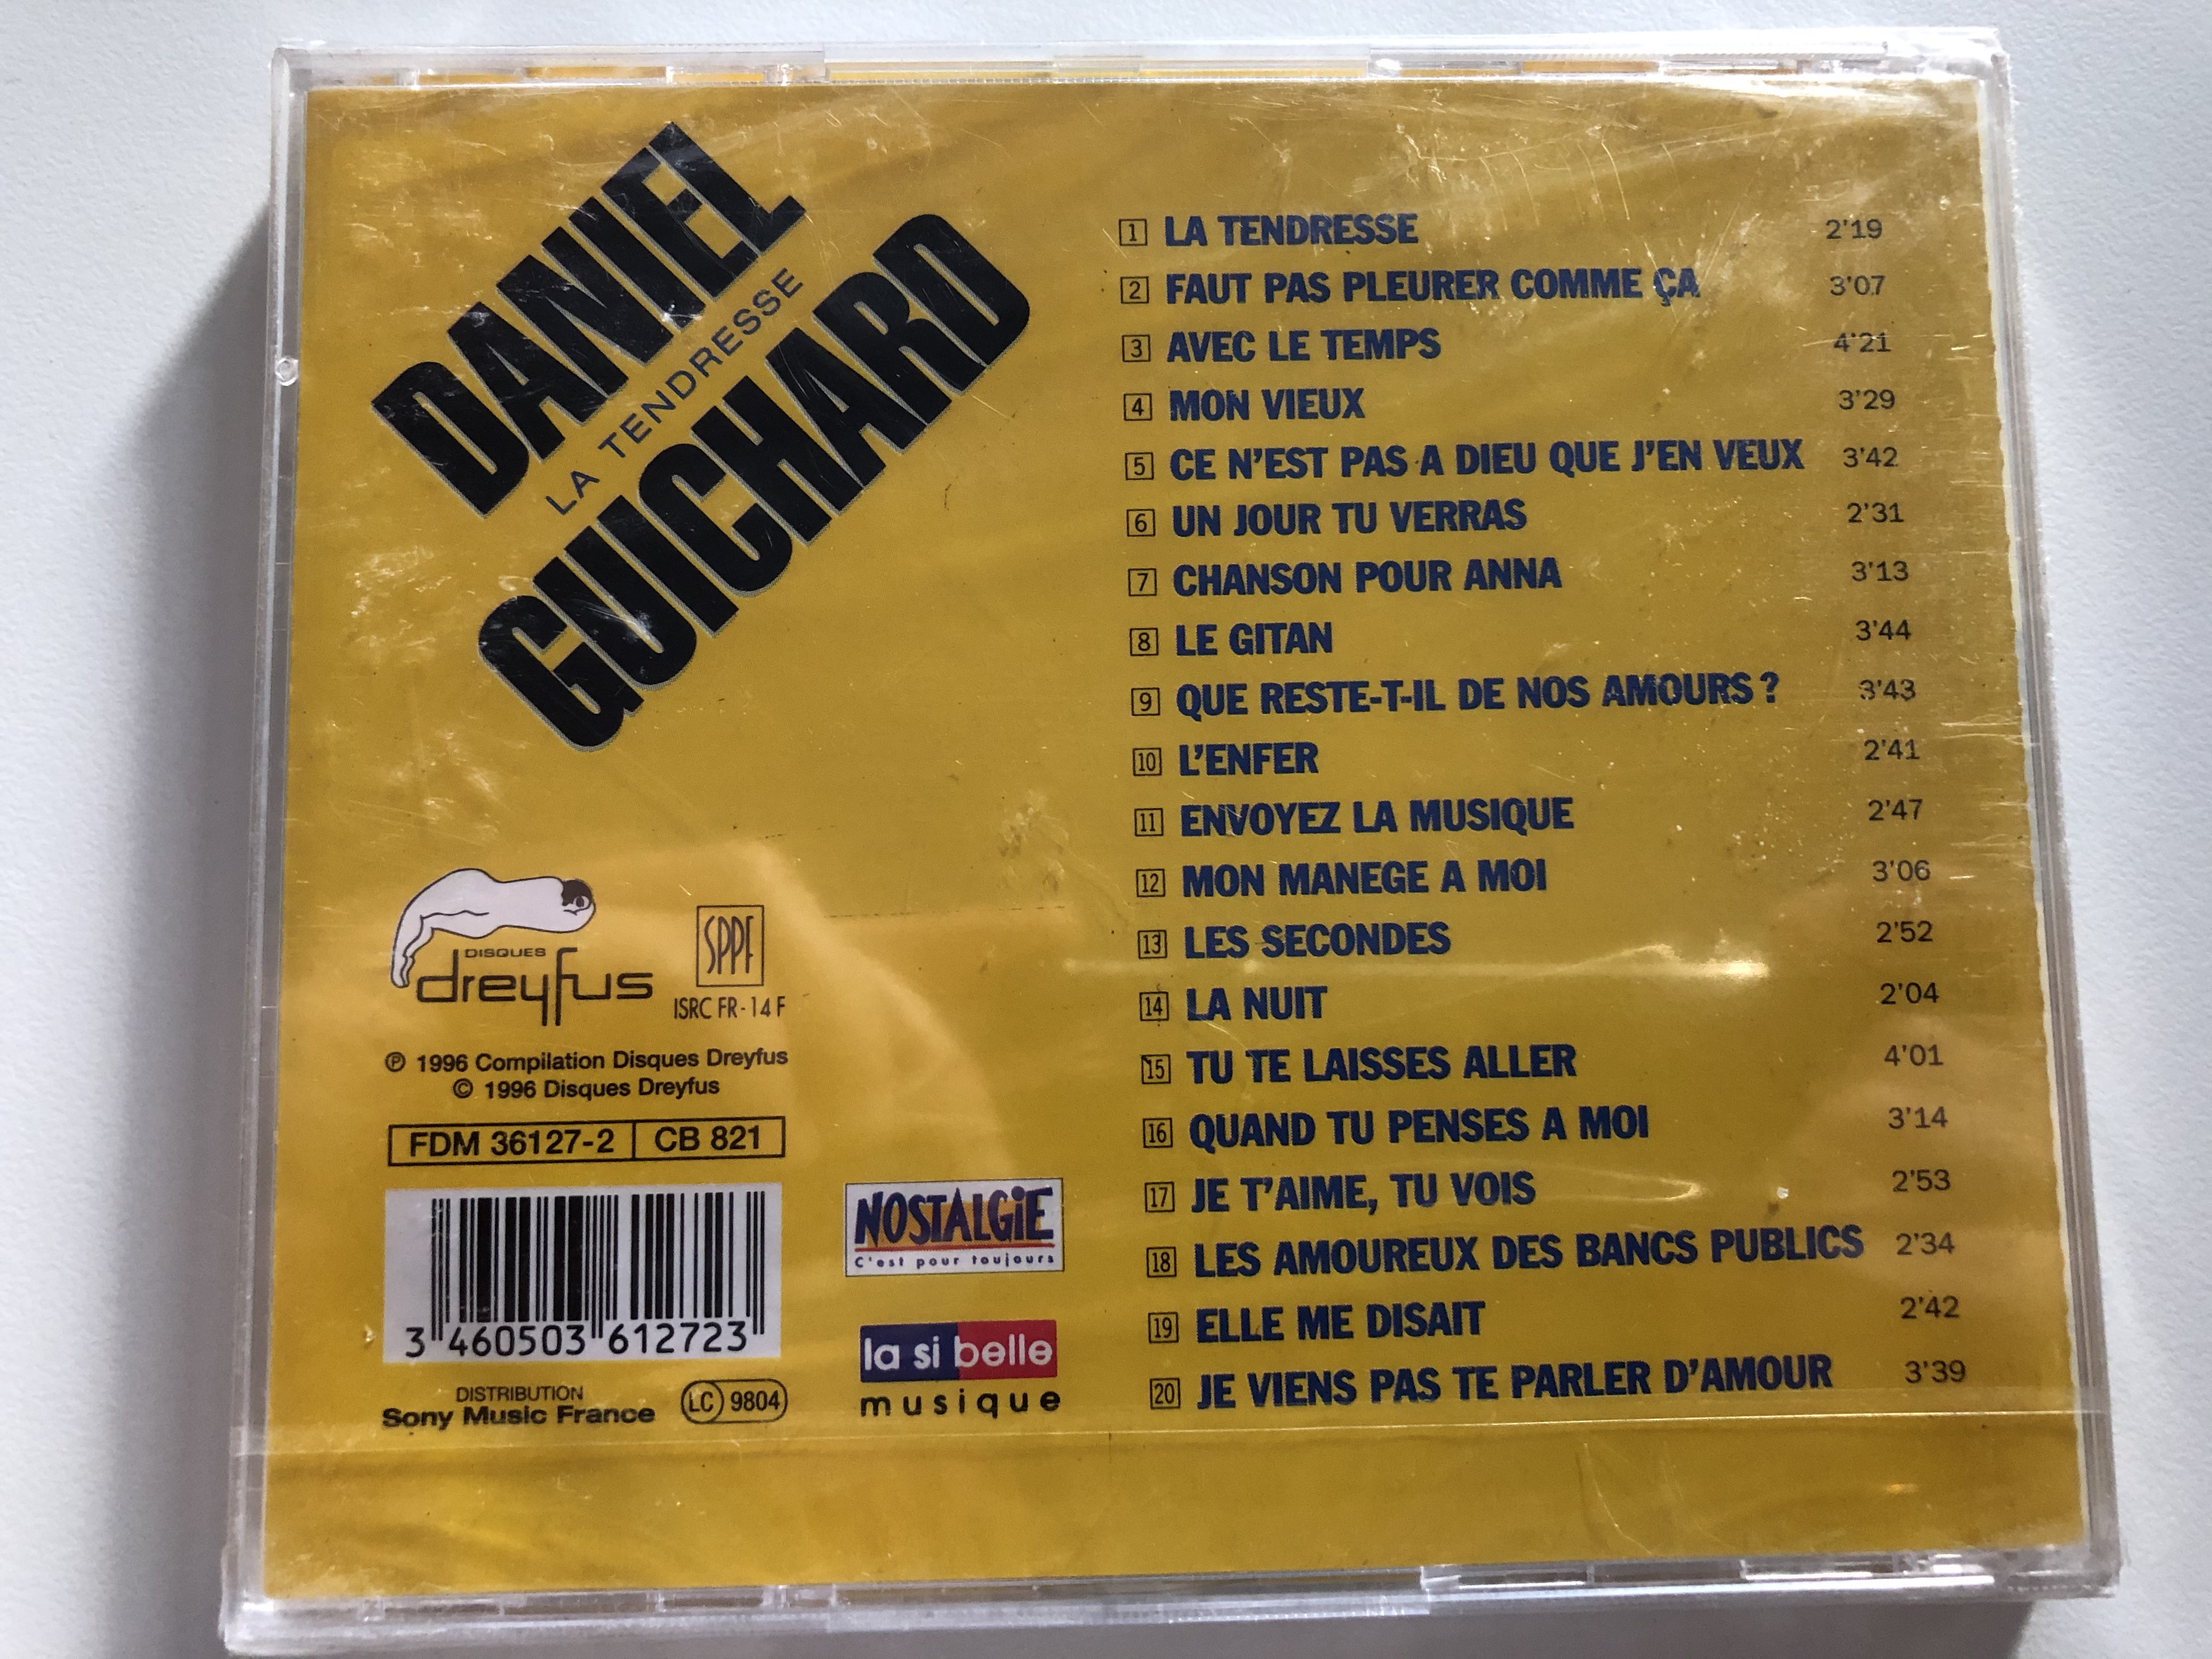 daniel-guichard-la-tendresse-disques-dreyfus-audio-cd-1996-fdm-36127-2-2-.jpg